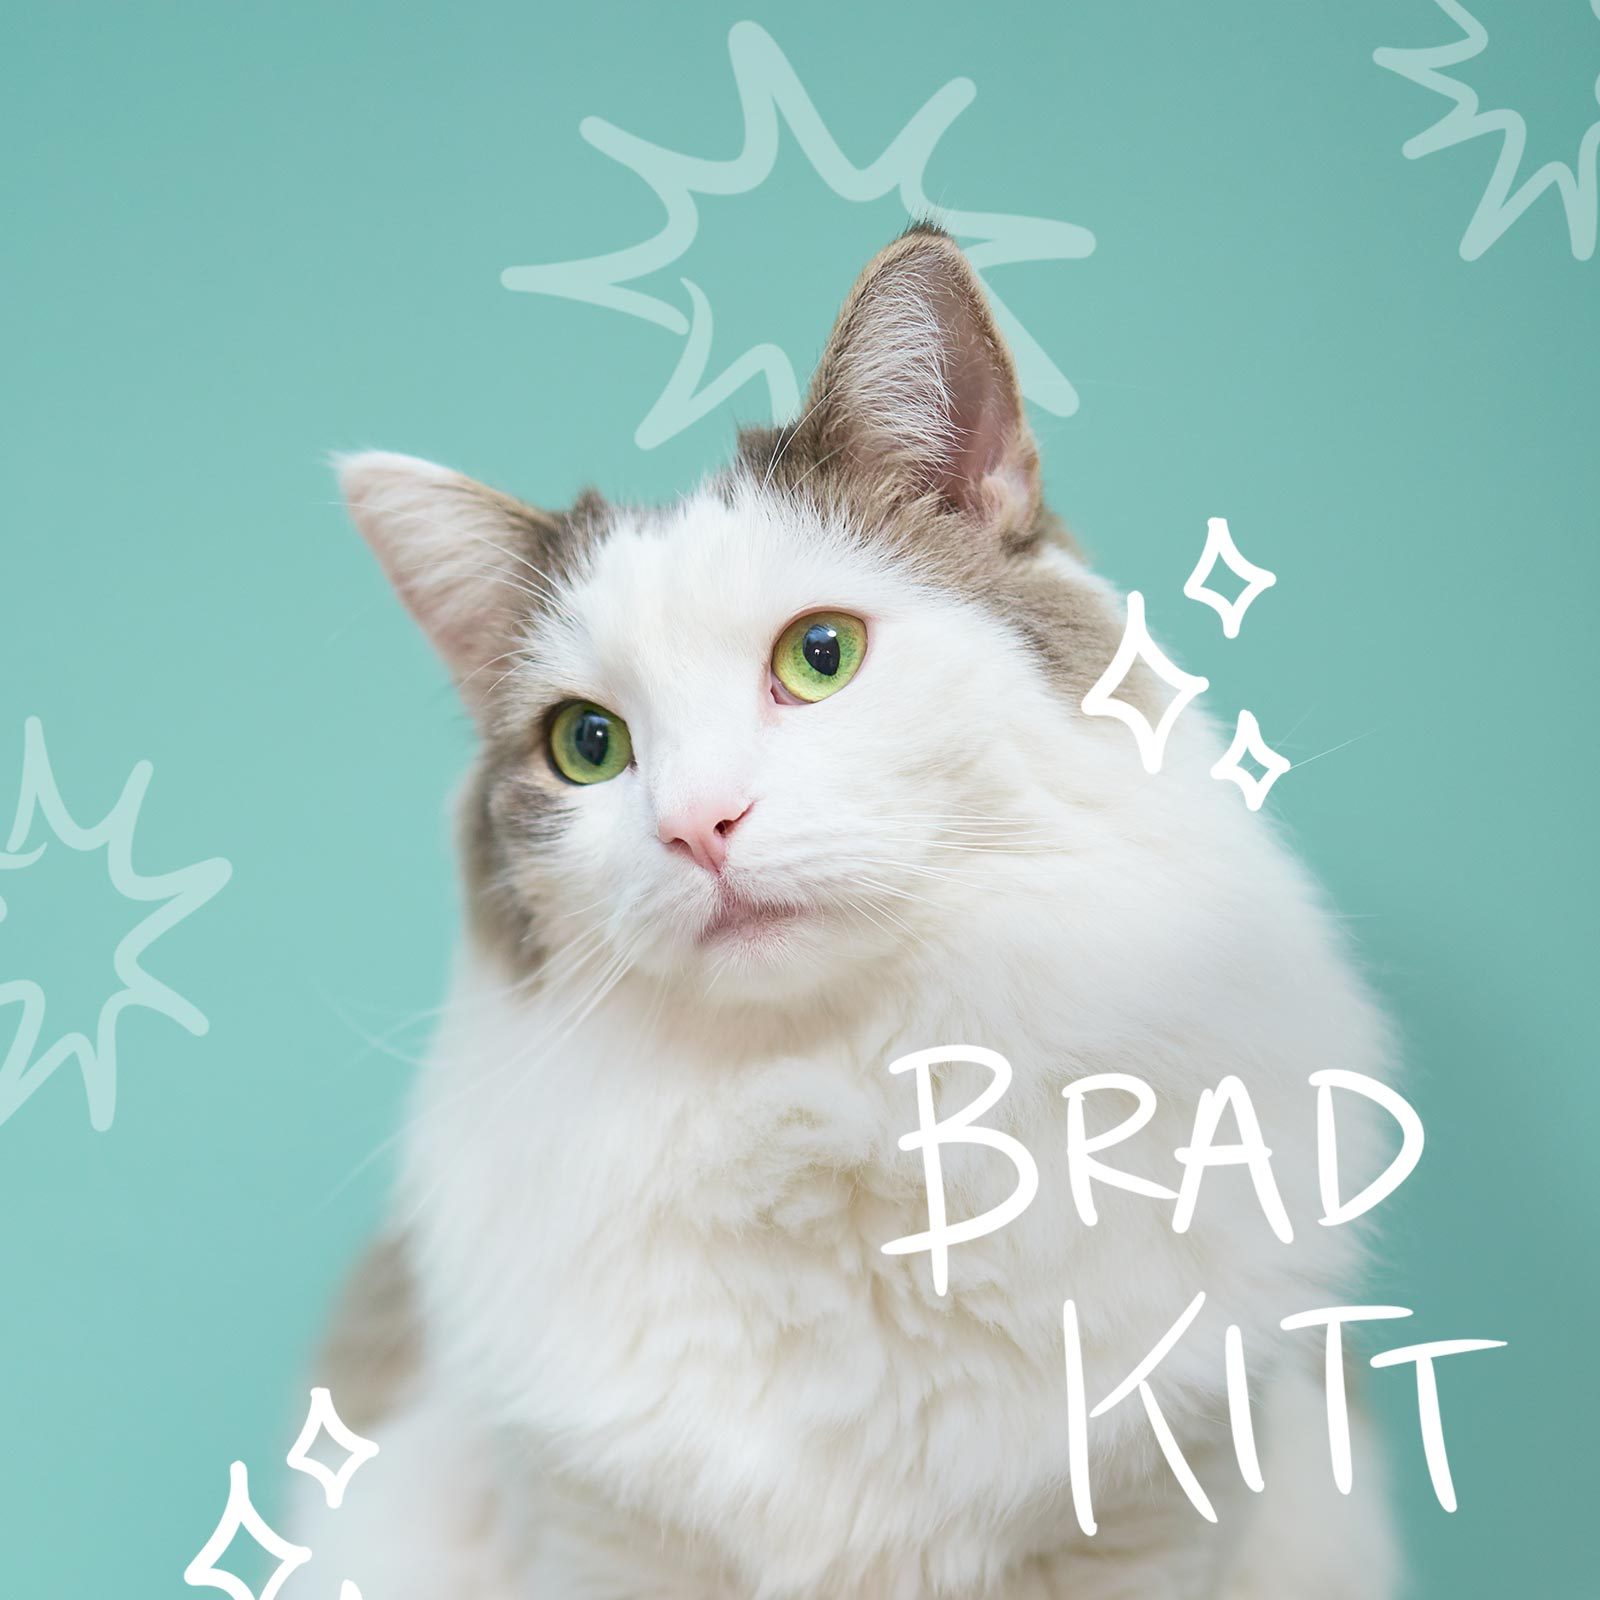 Glamourous-looking cat named Brad Kitt